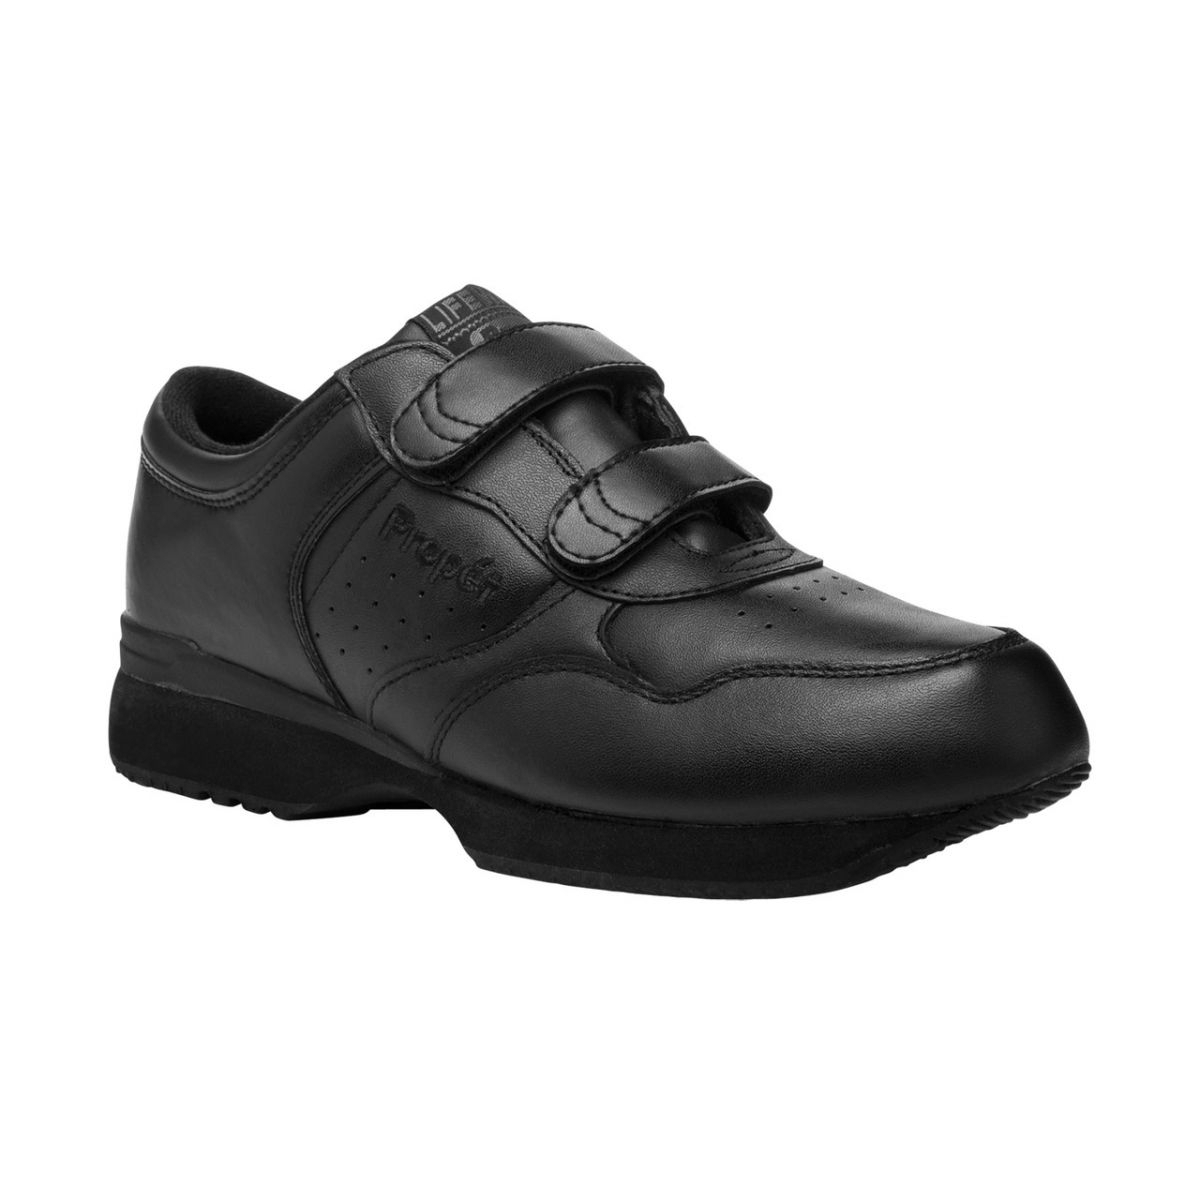 Propet Men's Life Walker Strap Shoe Black - M3705BLK SPORT WHITE - SPORT WHITE, 8-E